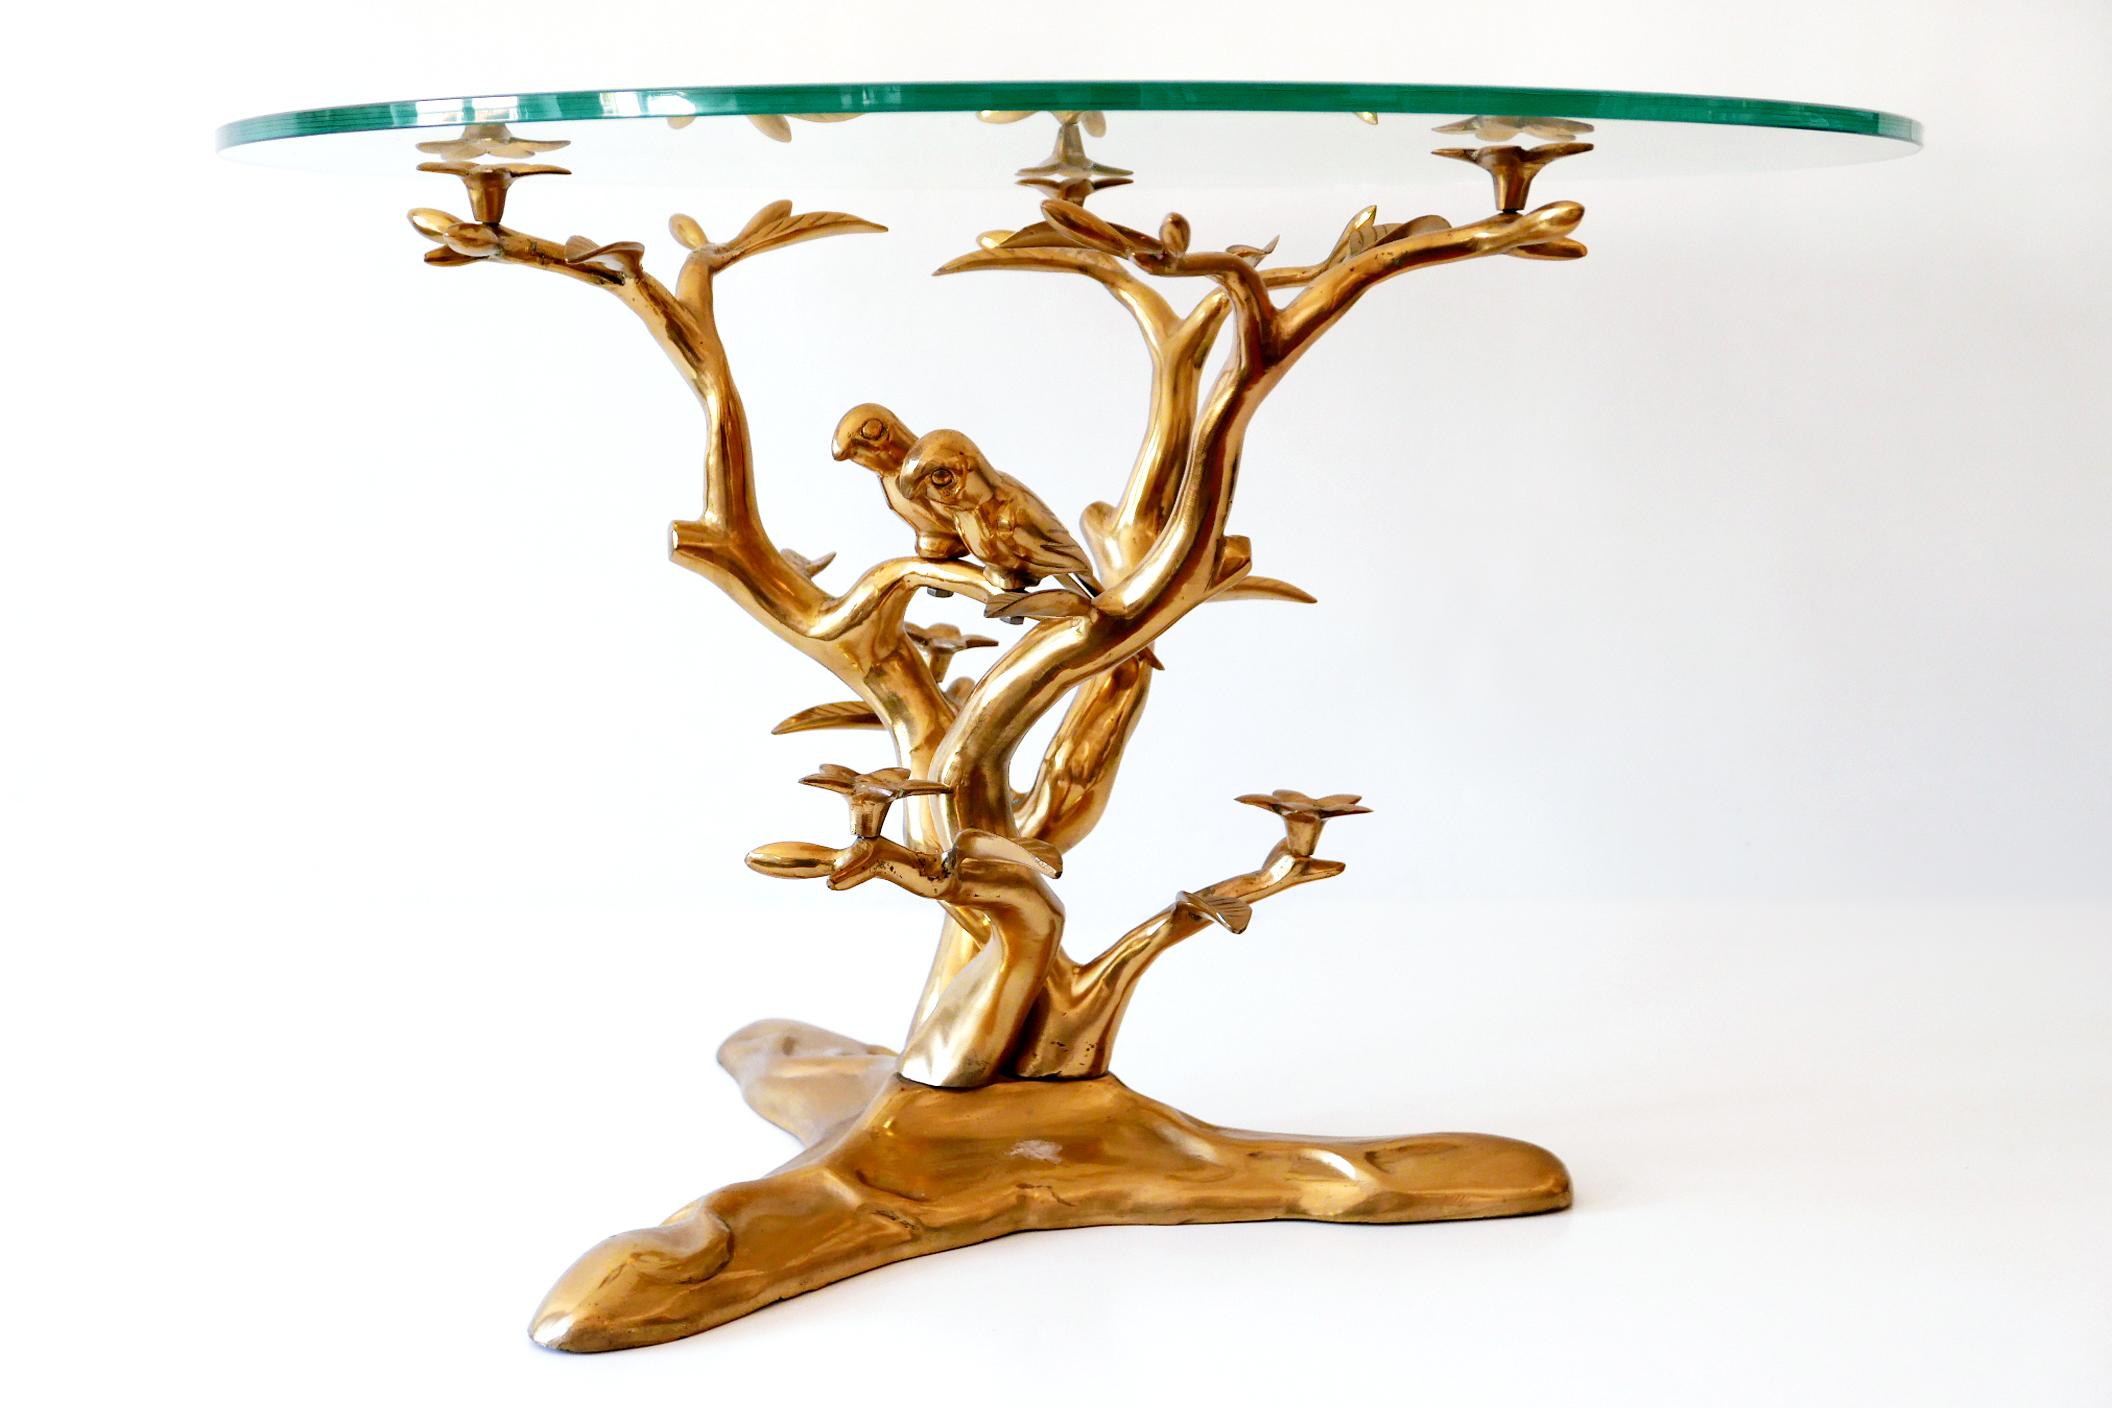 Belgian Sculptural Mid-Century Modern Brass Coffee Table by Willy Daro, Belgium, 1970s